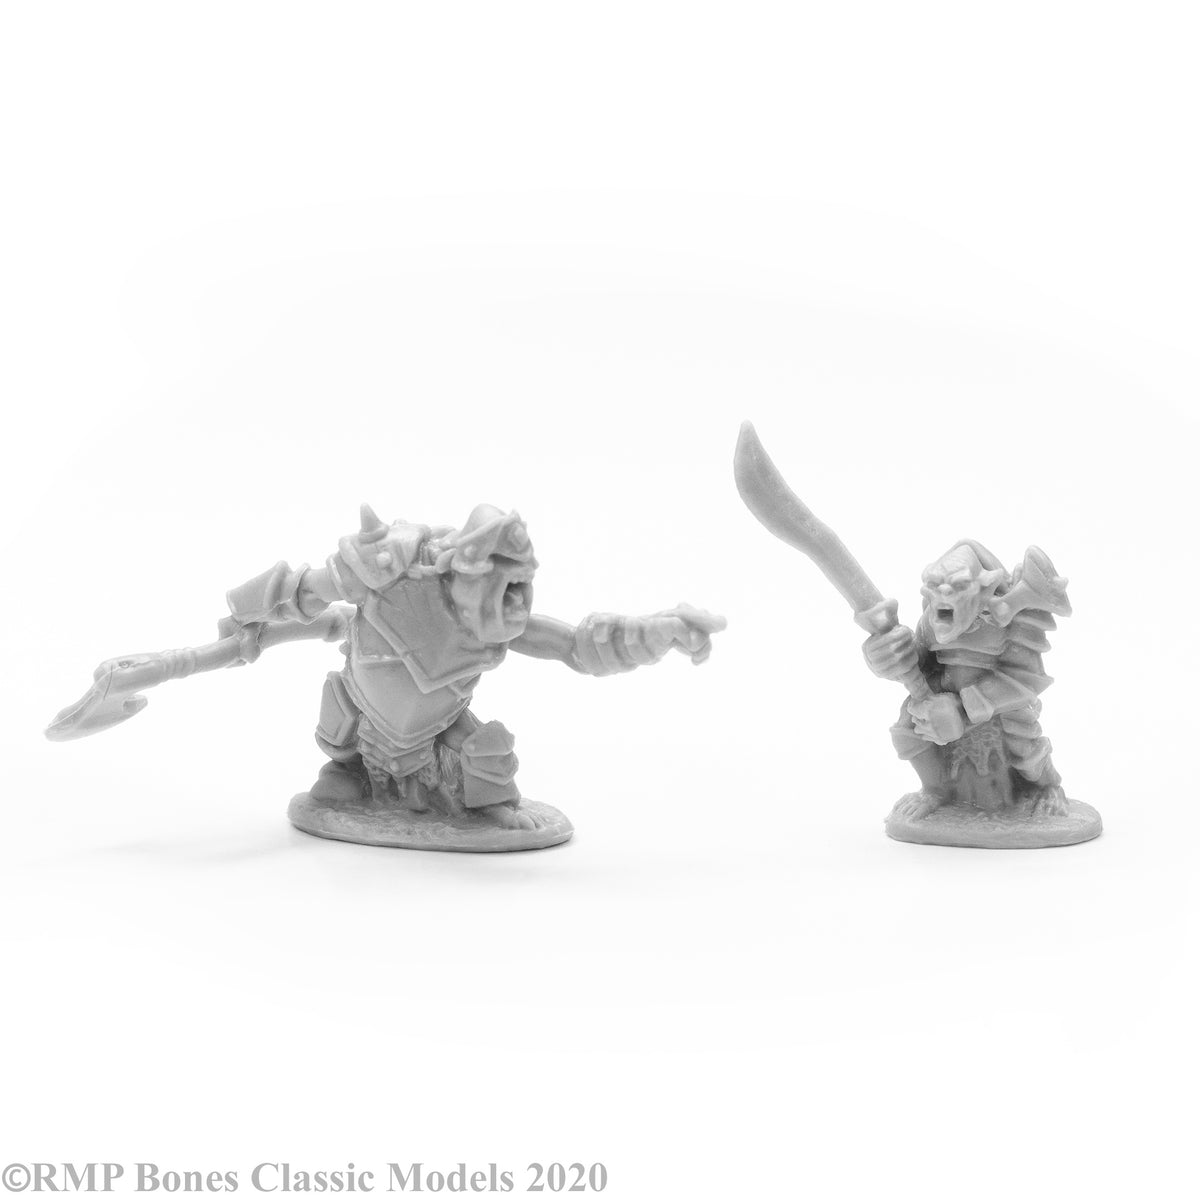 Armored Goblin Leaders -2 (Ben Siens sculpt)